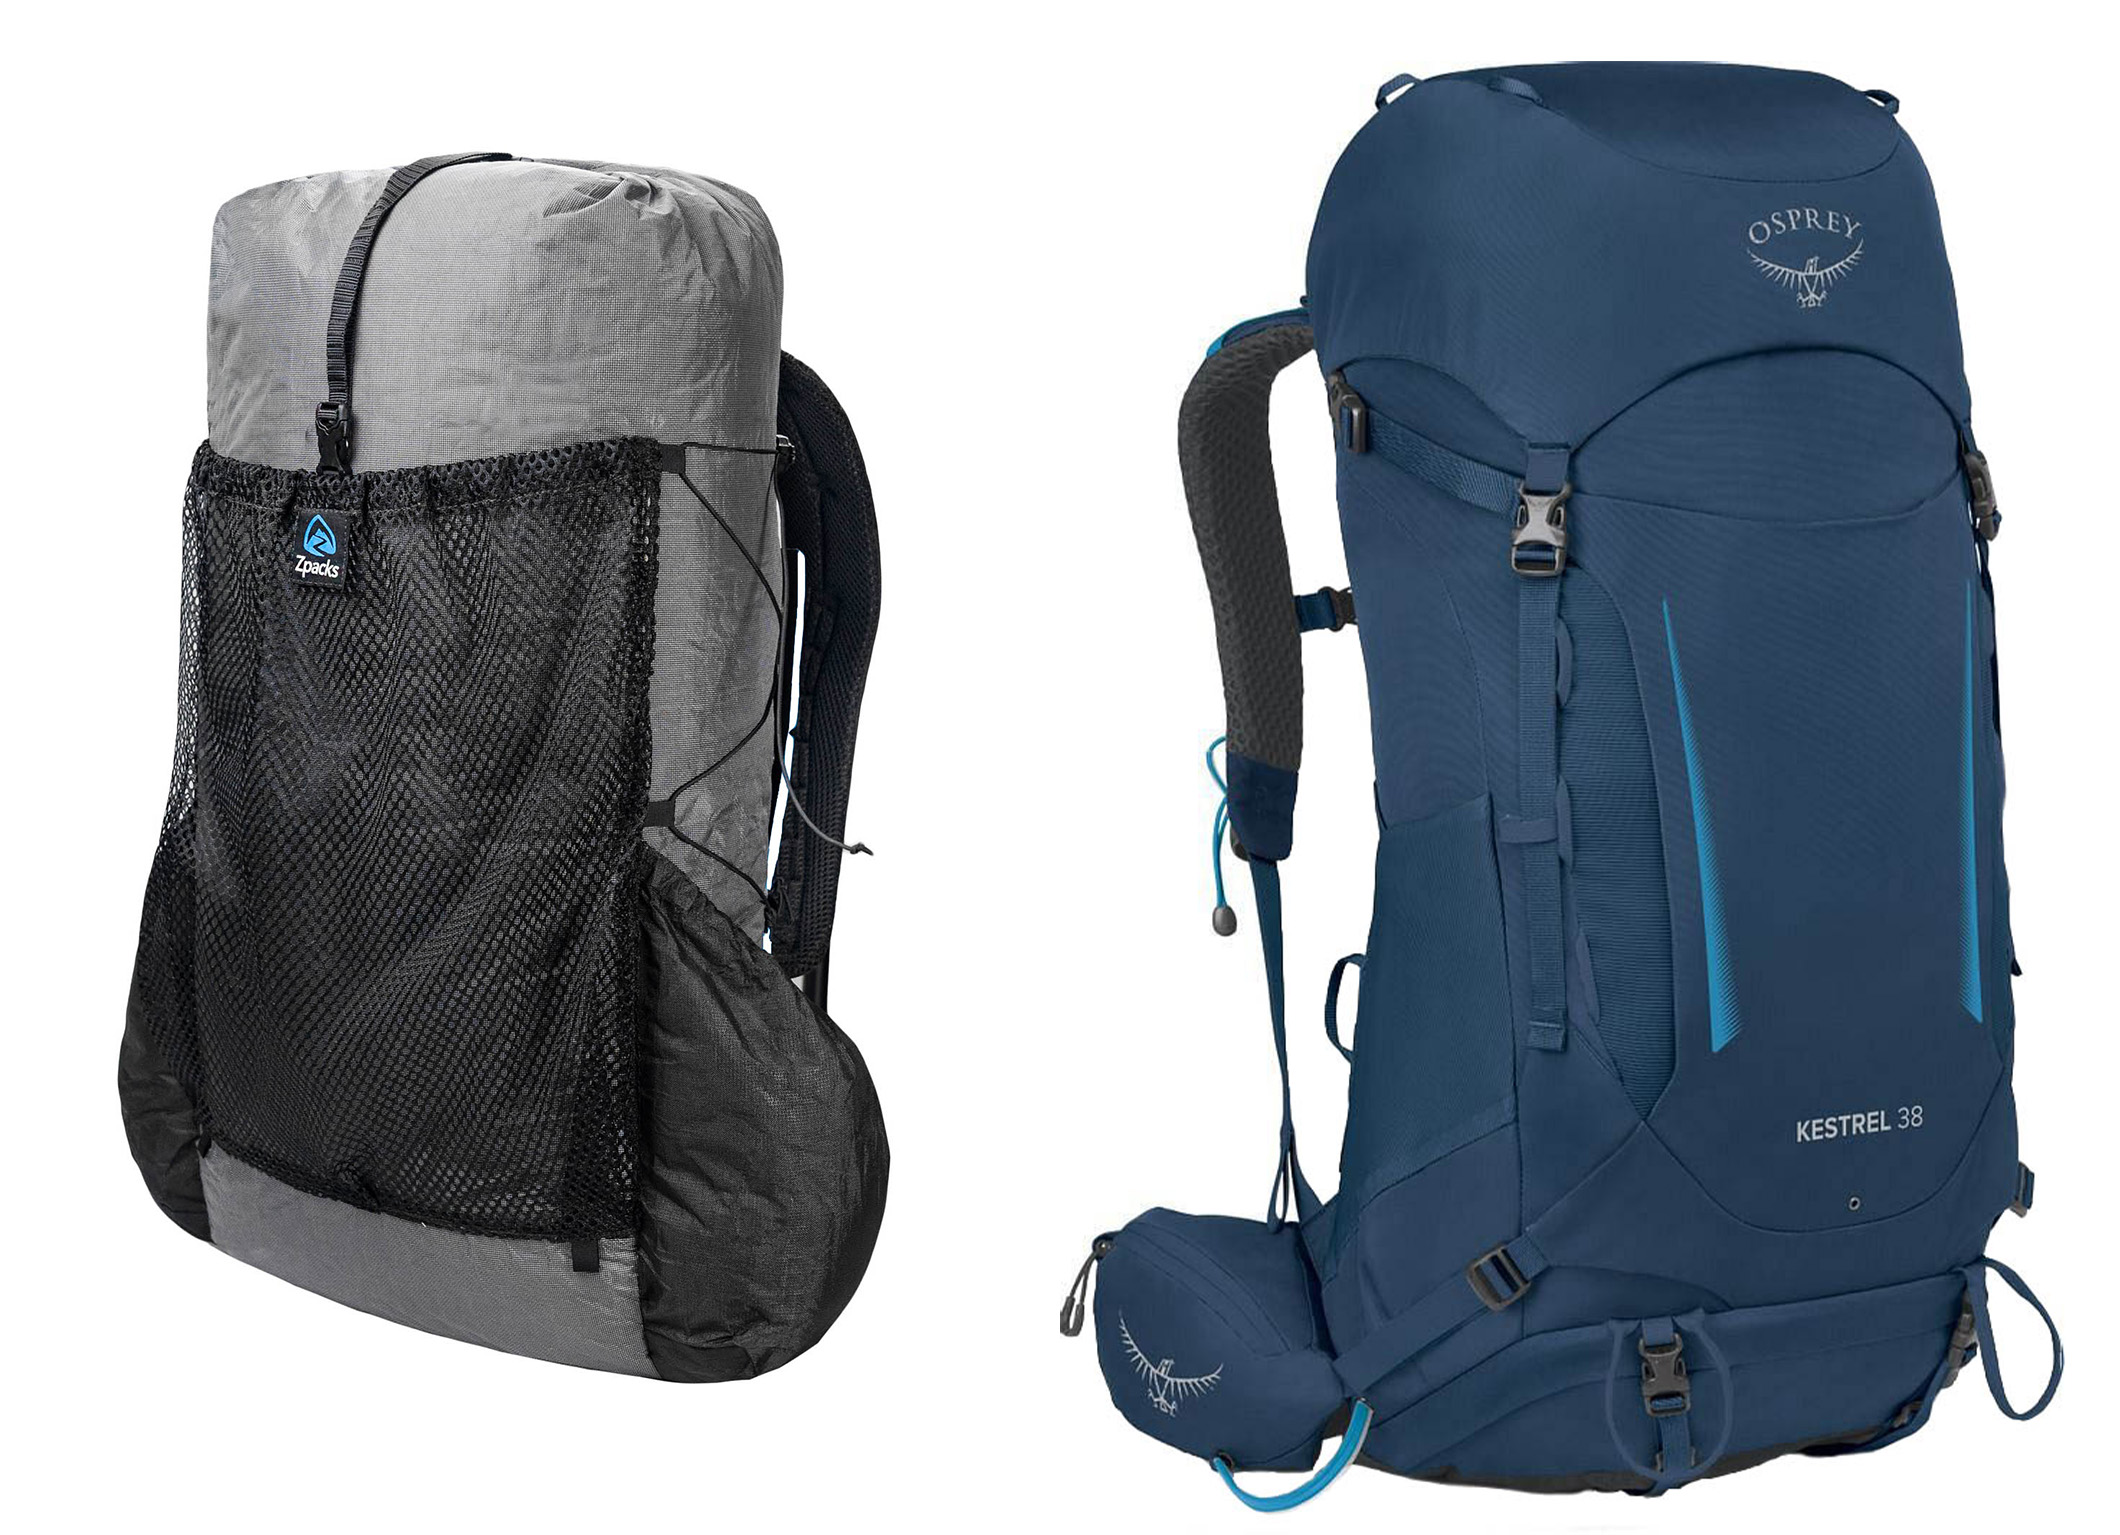 Ultralight backpack alongside traditional backpack